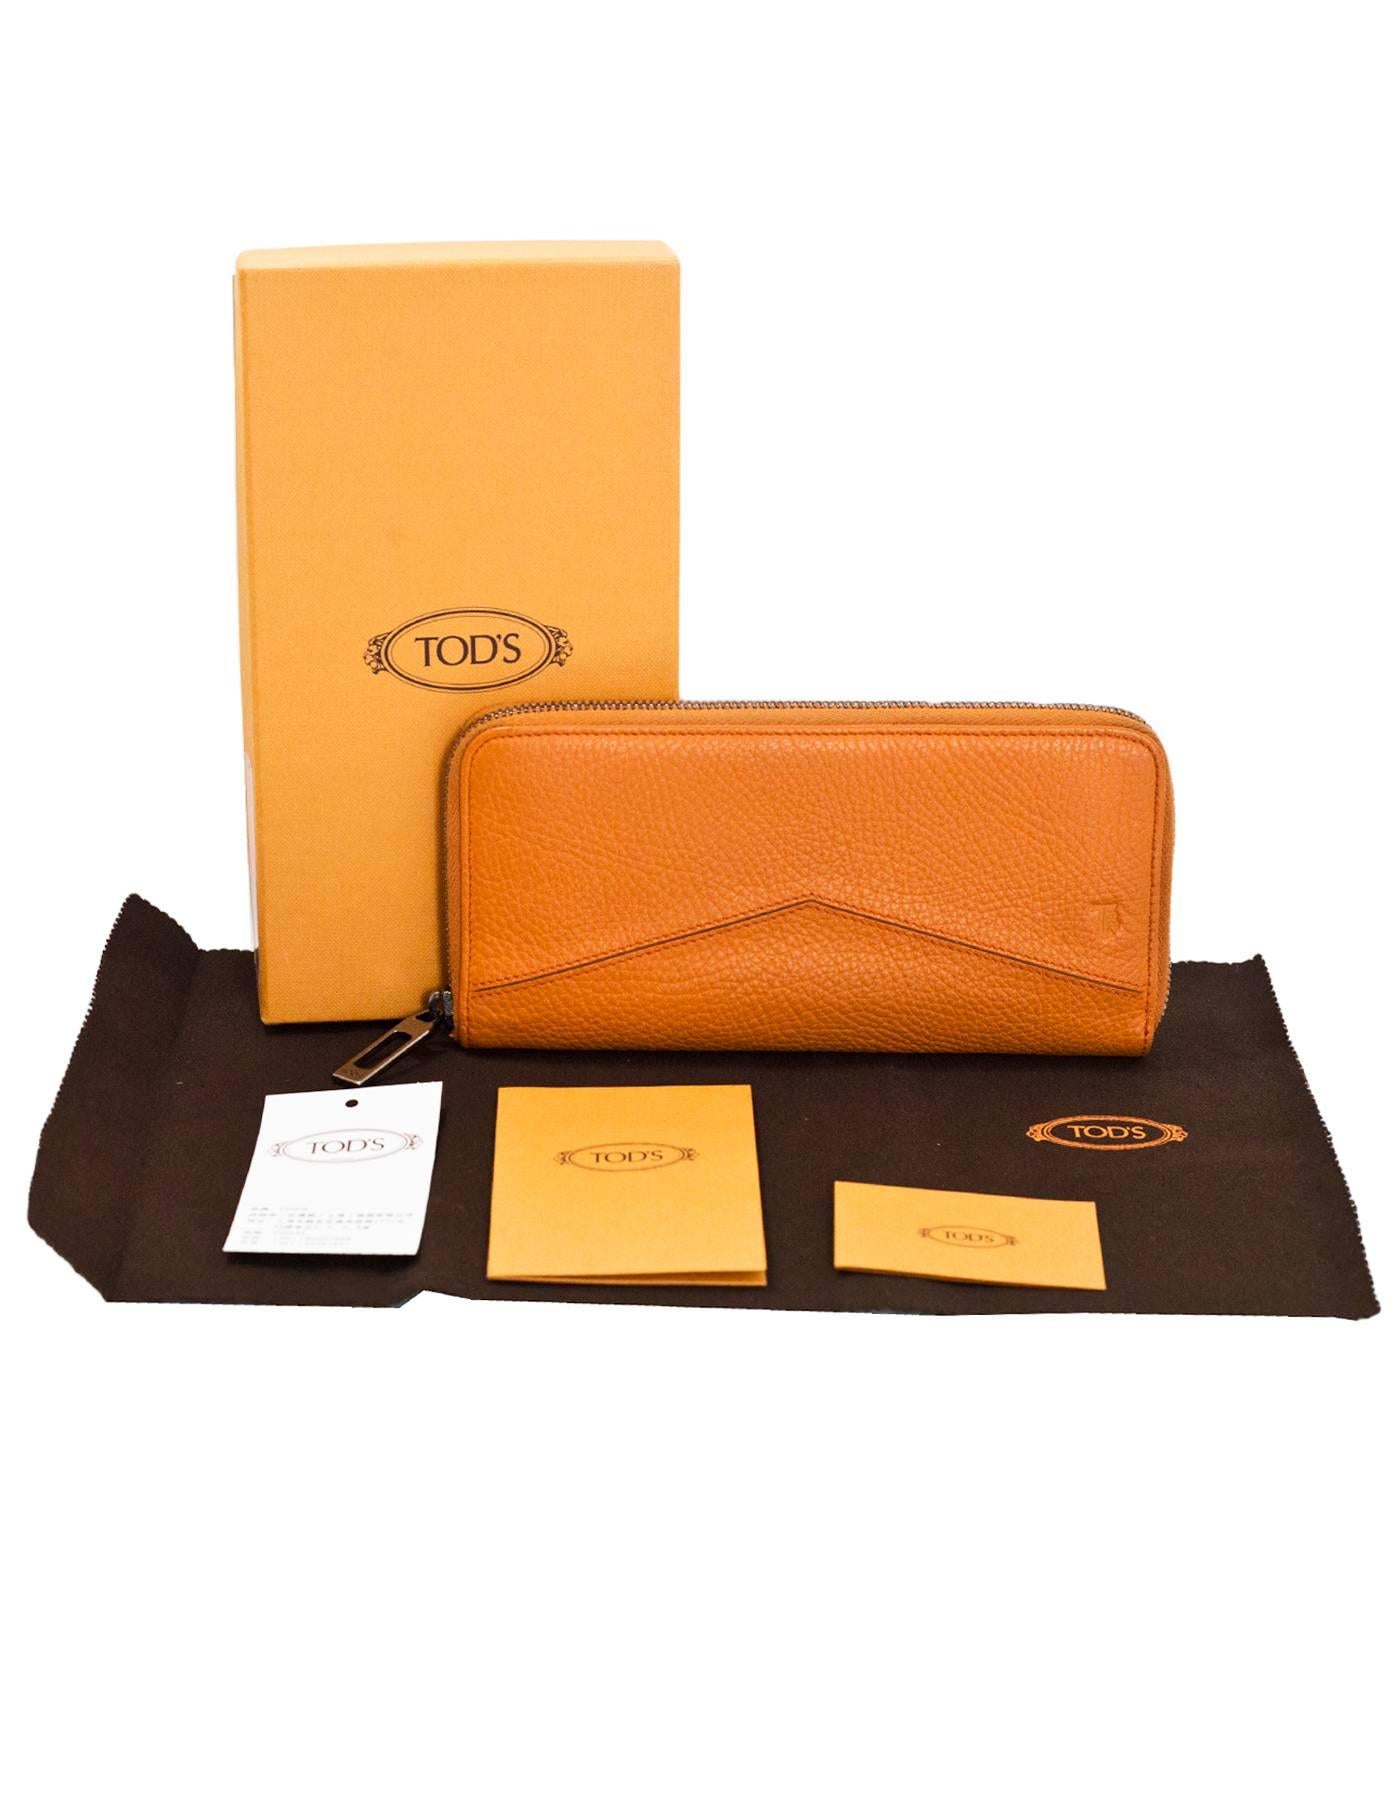 Tod's Orange Leather Zip Around Wallet with Box 5